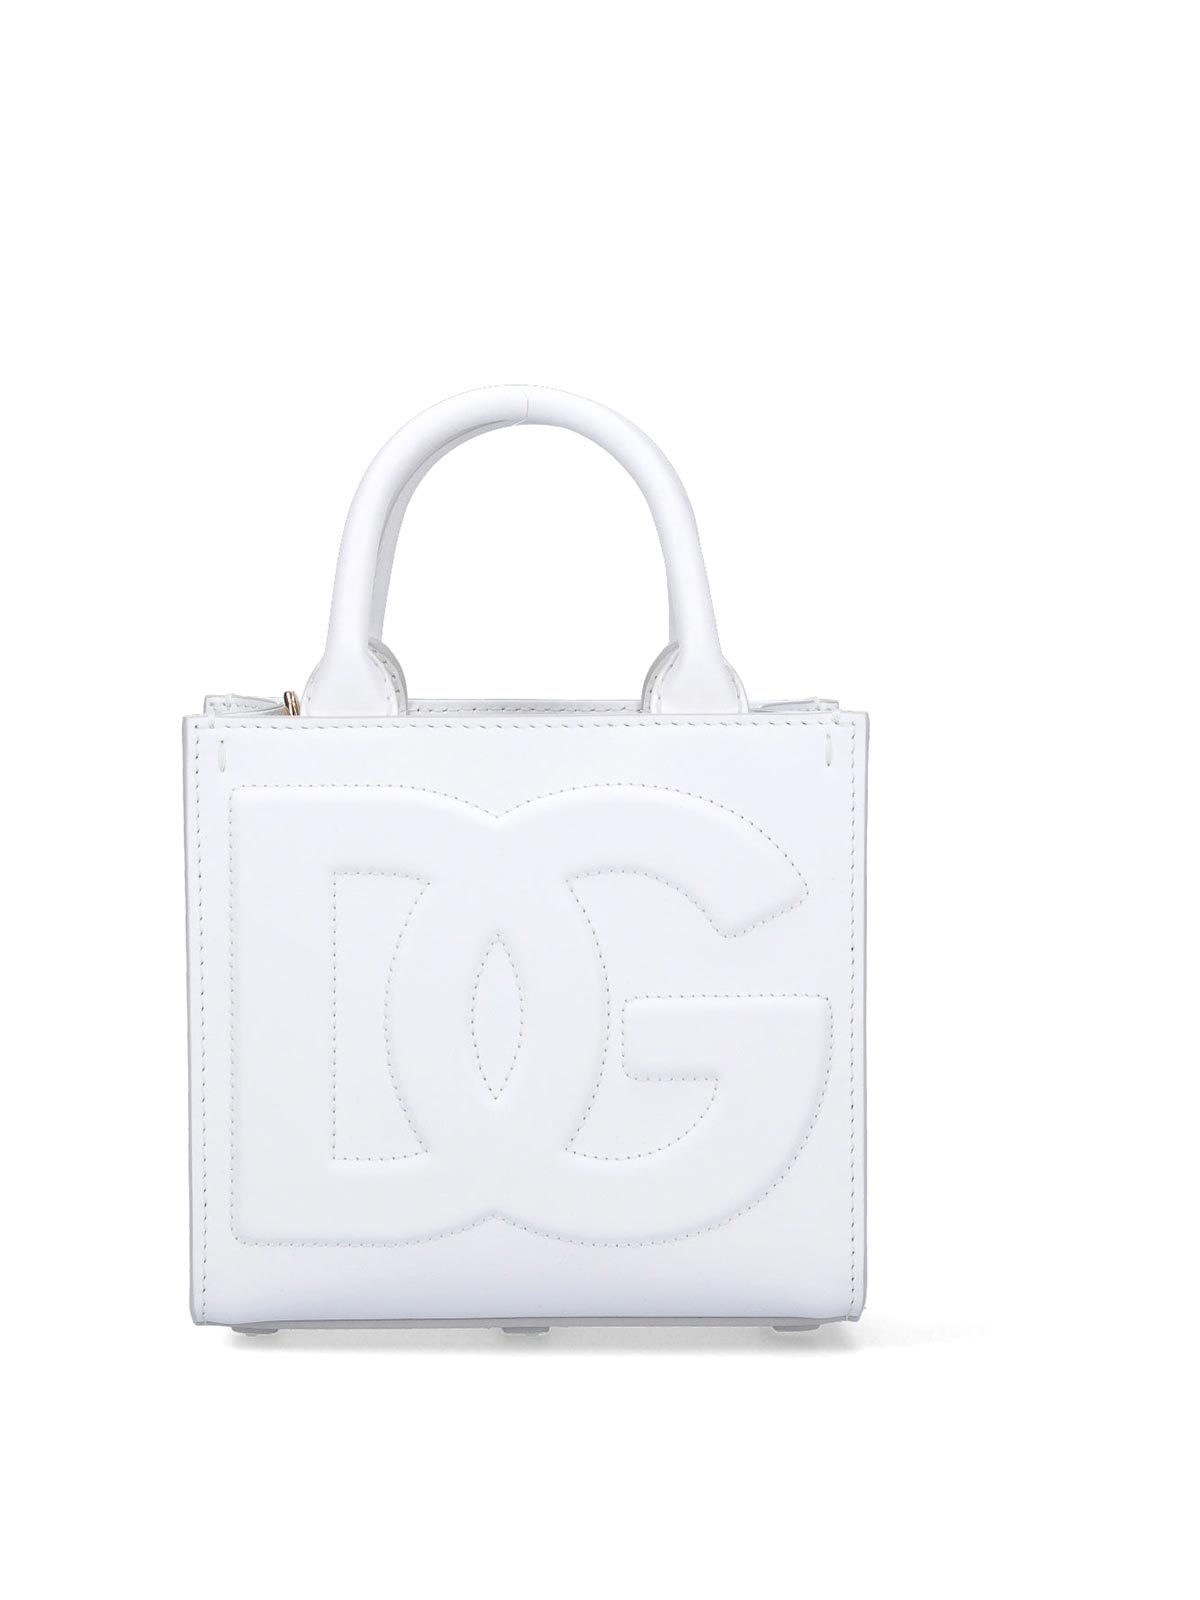 Dolce & Gabbana Small Shopping Bag In White